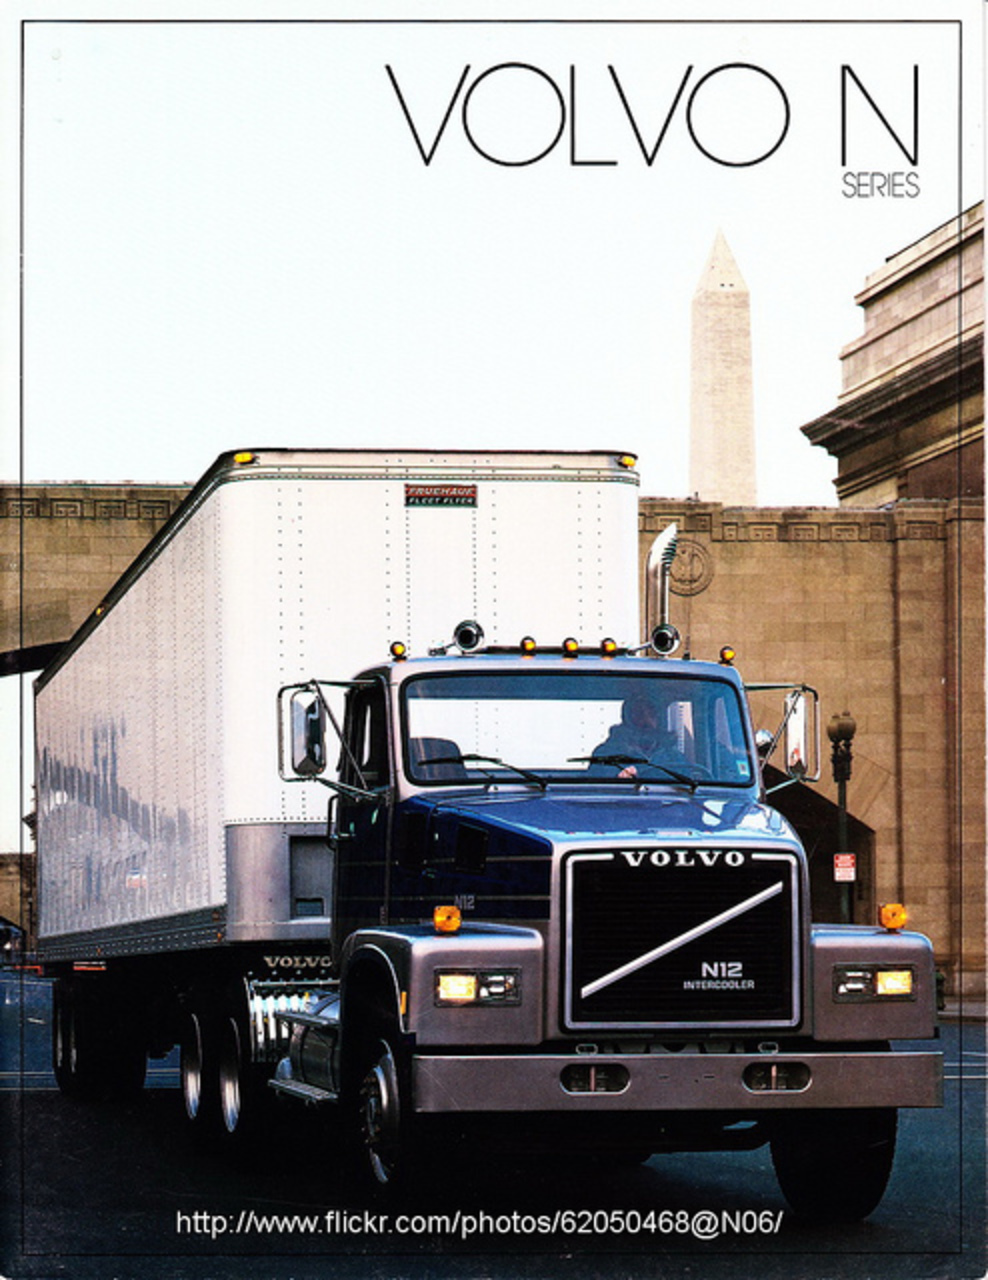 VA-72 Volvo N Series (A4)